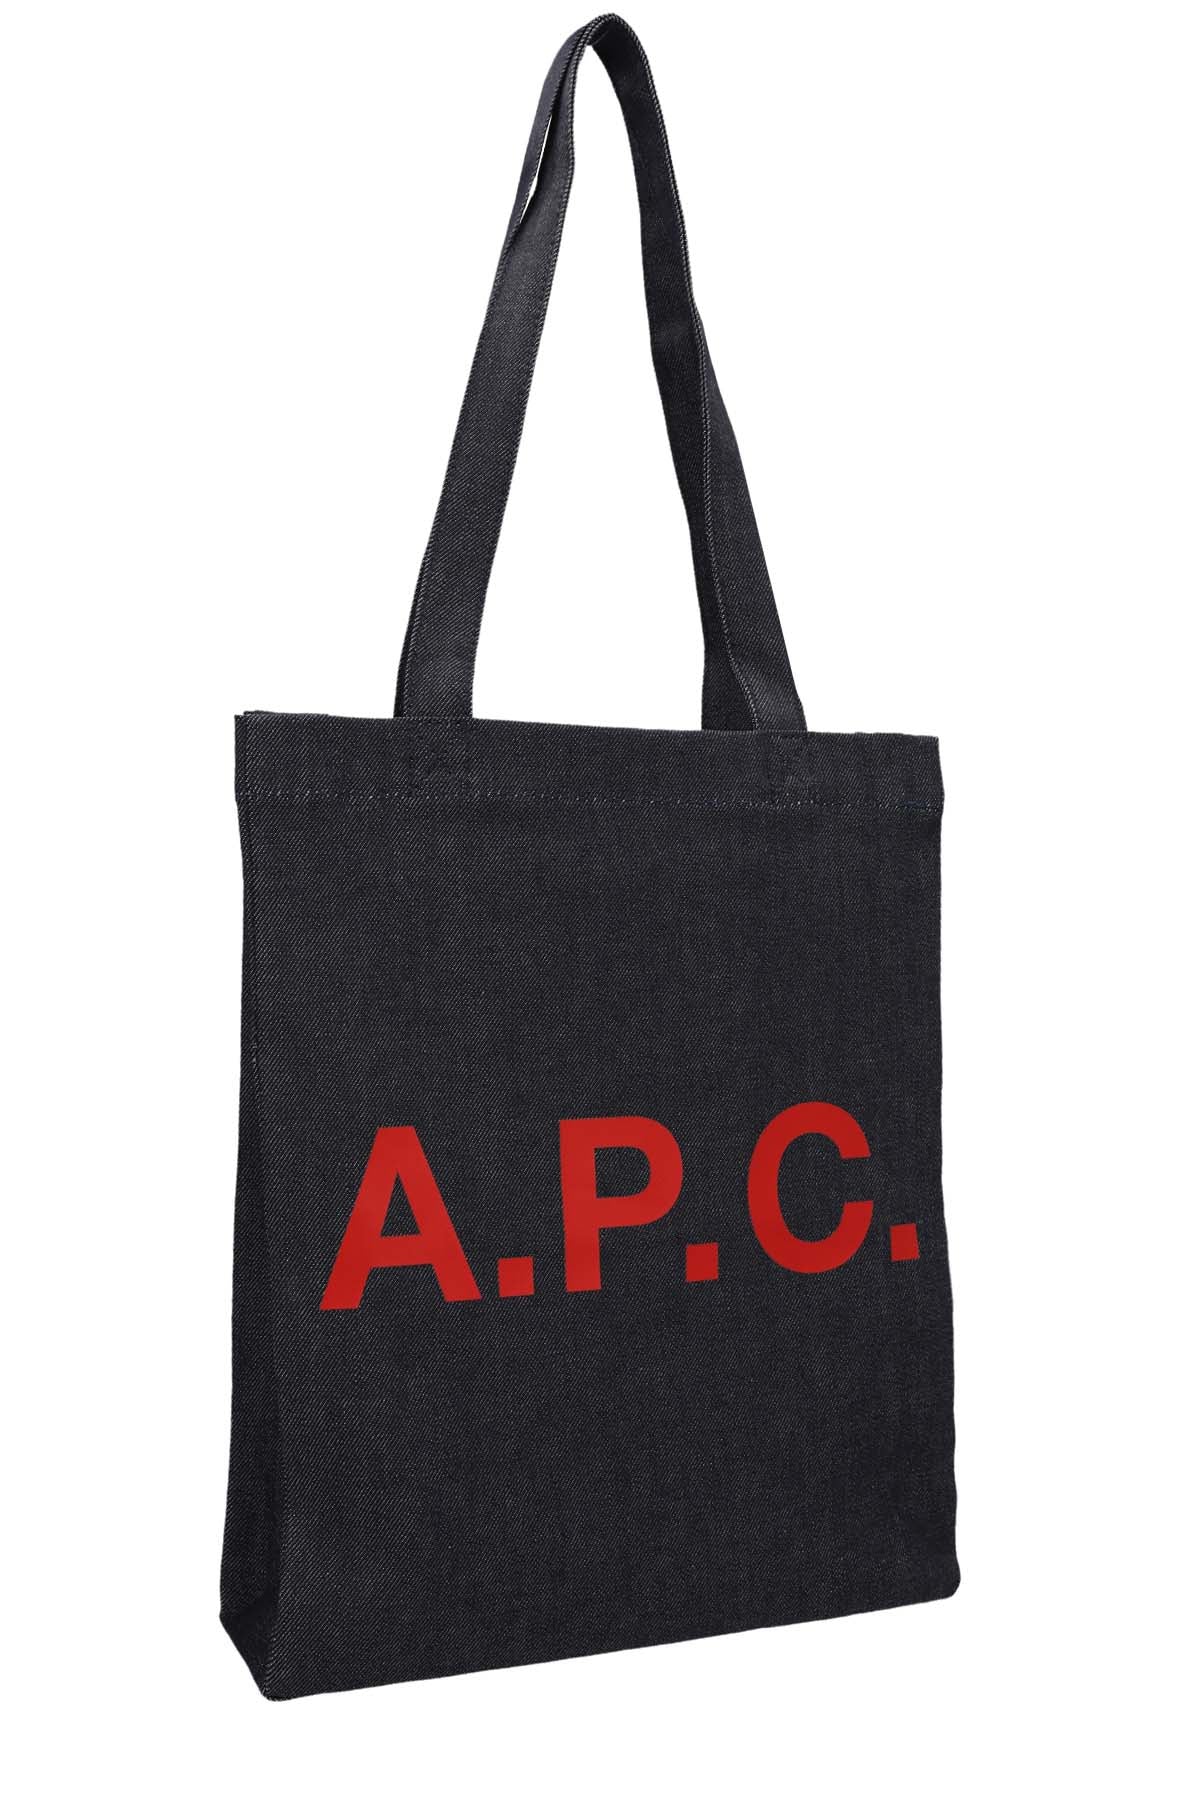 A.P.C. 'LOU' SHOPPING BAG COCSXM61793IAI